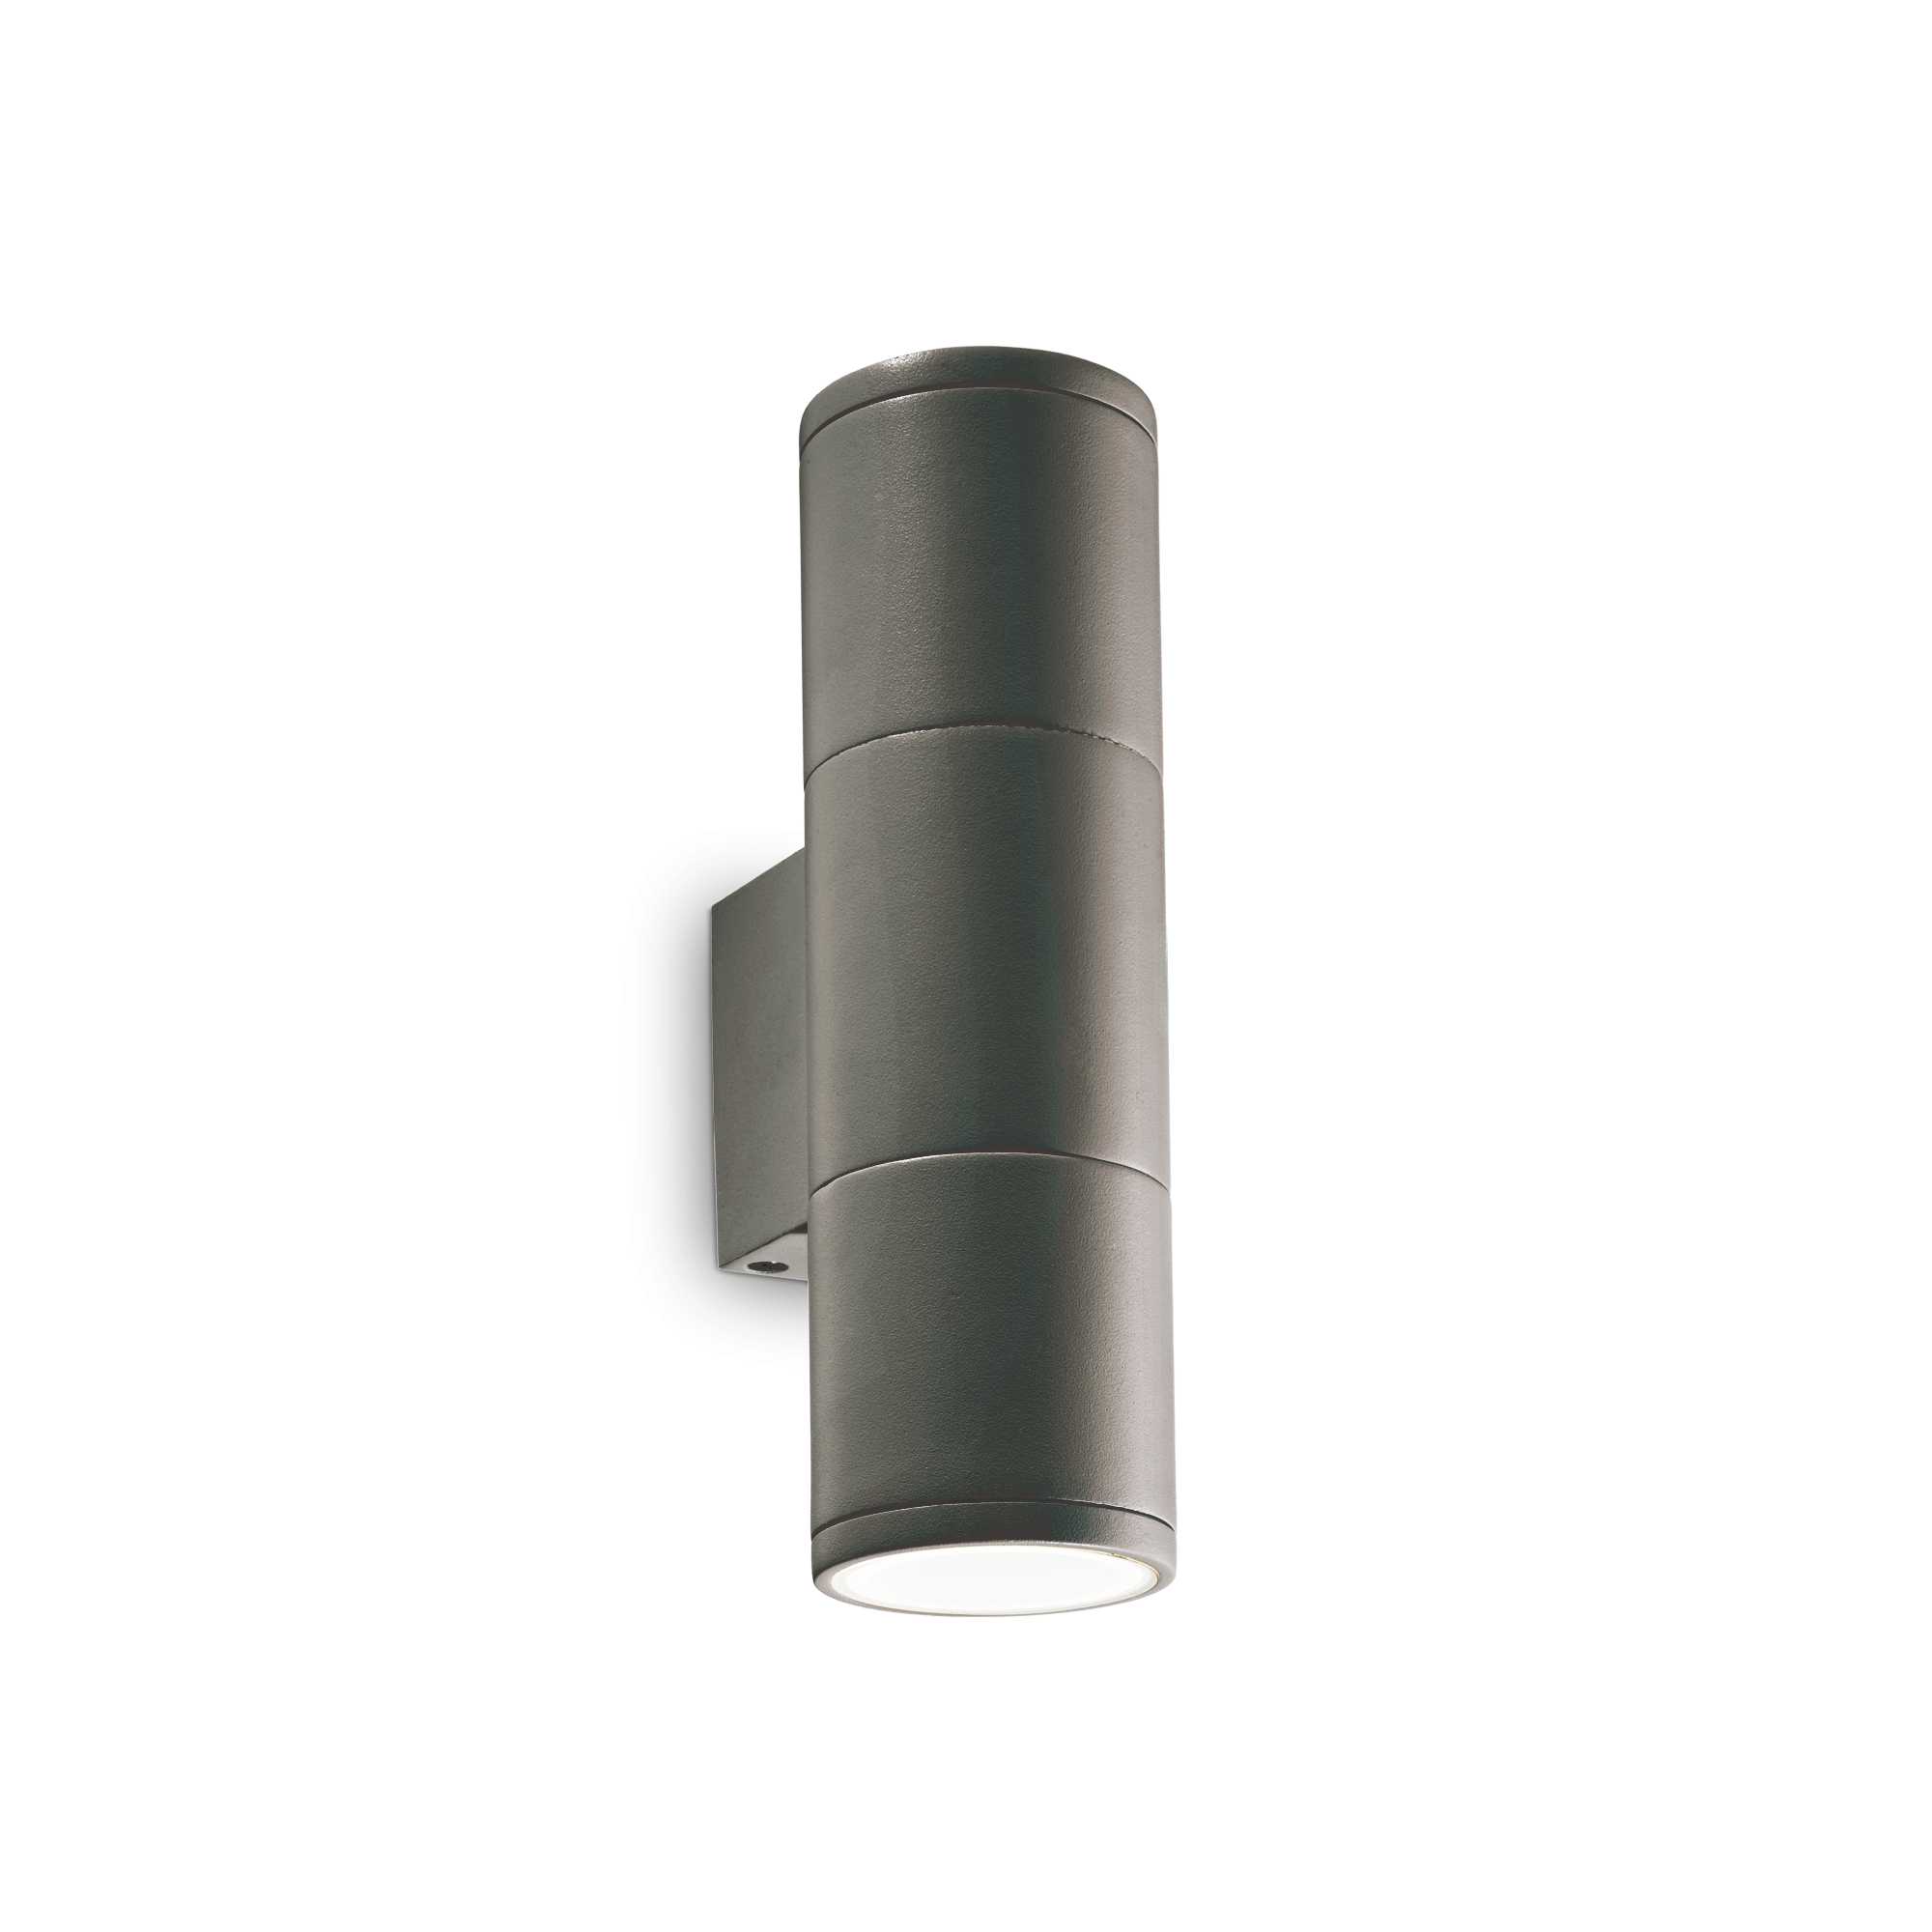 AD hotelska oprema Vanjska zidna lampa Gun ap2 mala- Antracit slika proizvoda